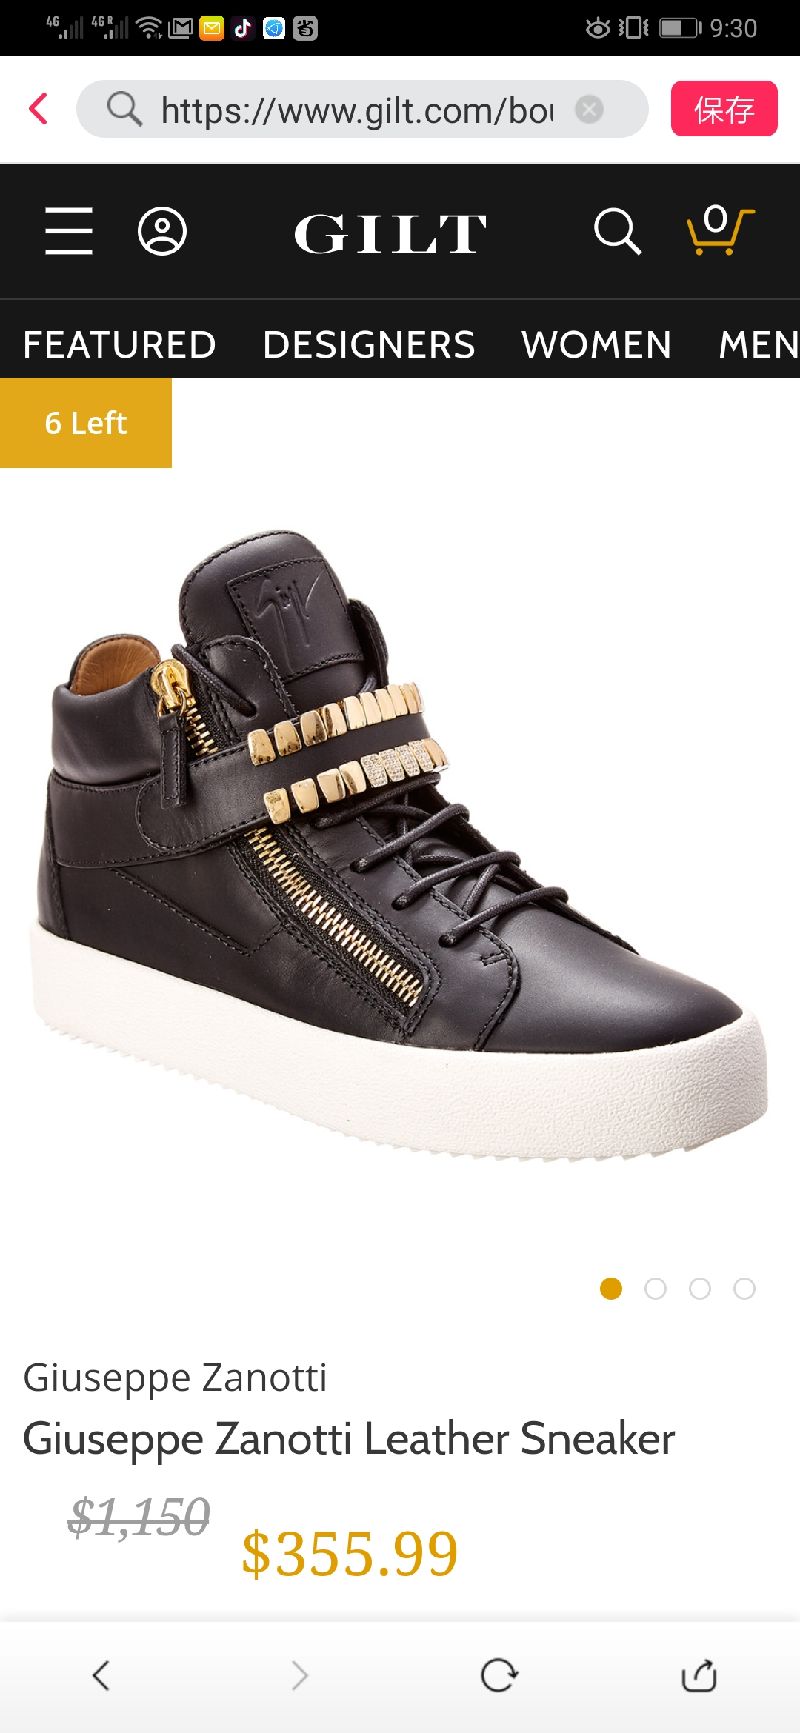 男士皮运动鞋 Giuseppe Zanotti Leather Sneaker / Gilt